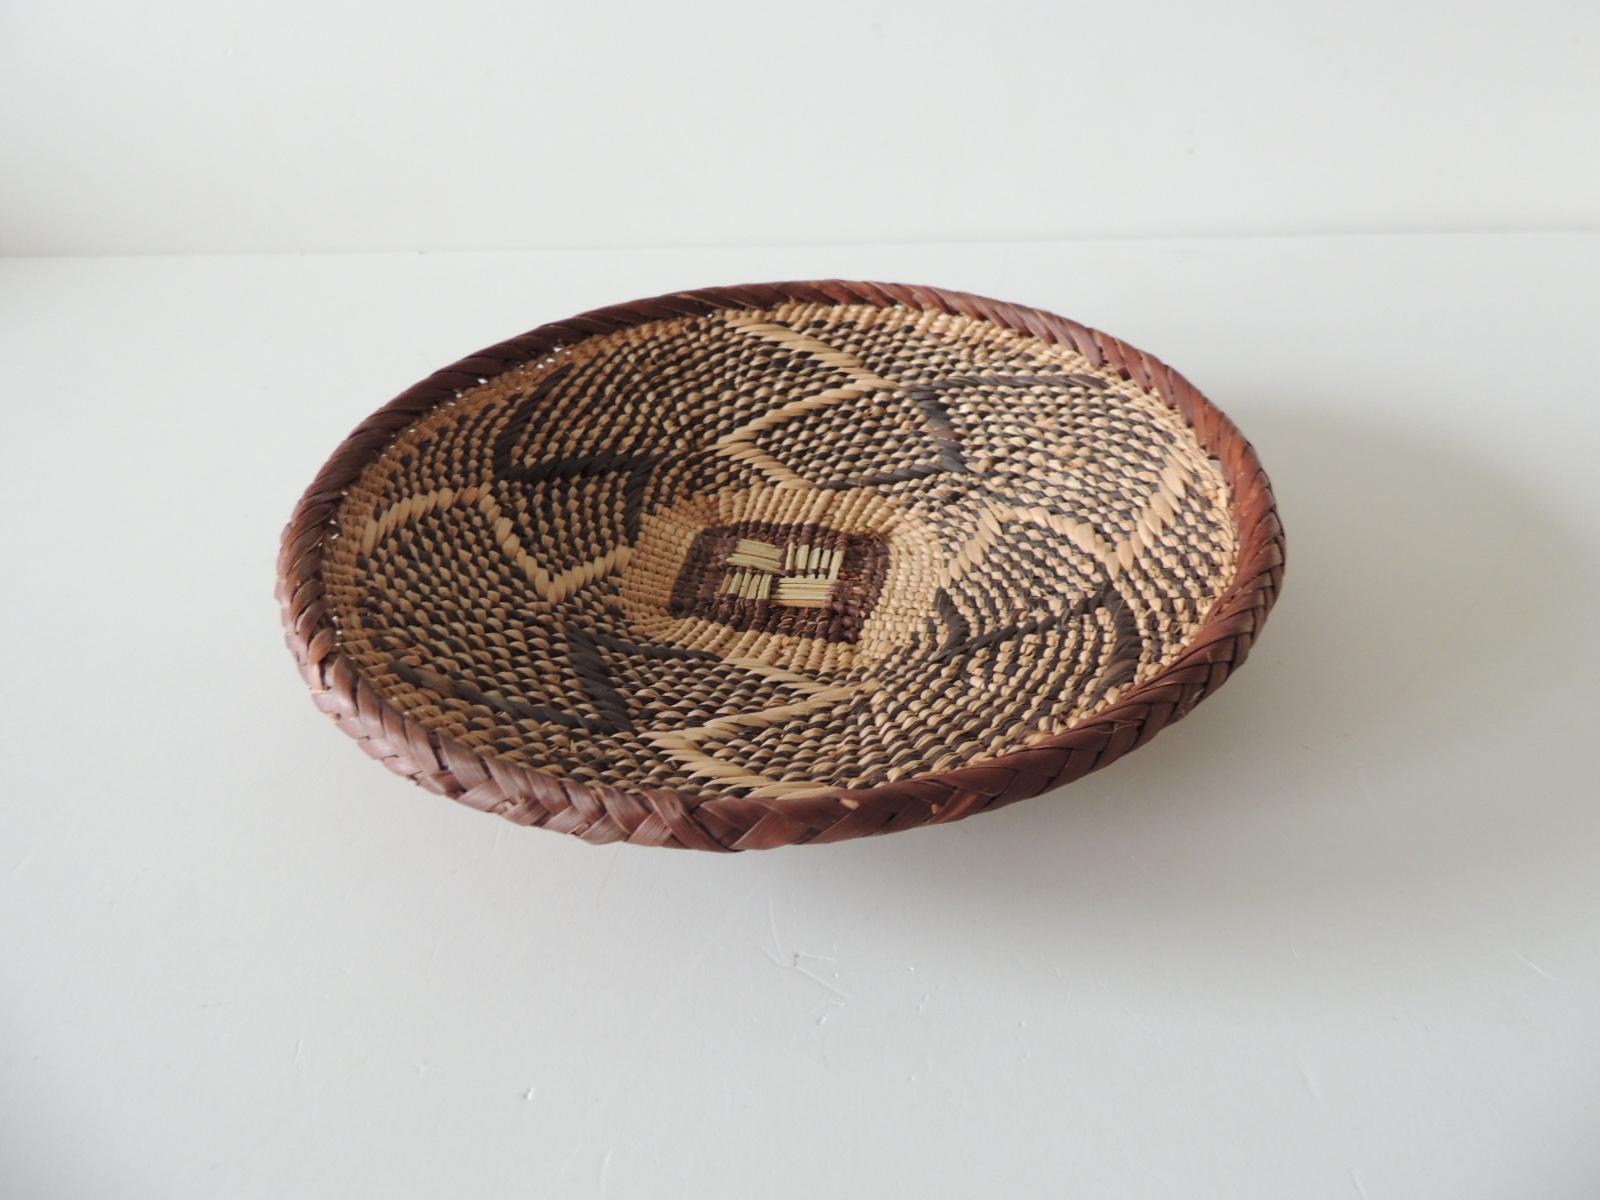 Vintage natural fiber artisanal small African basket.
Tribal pattern.
Size: 8